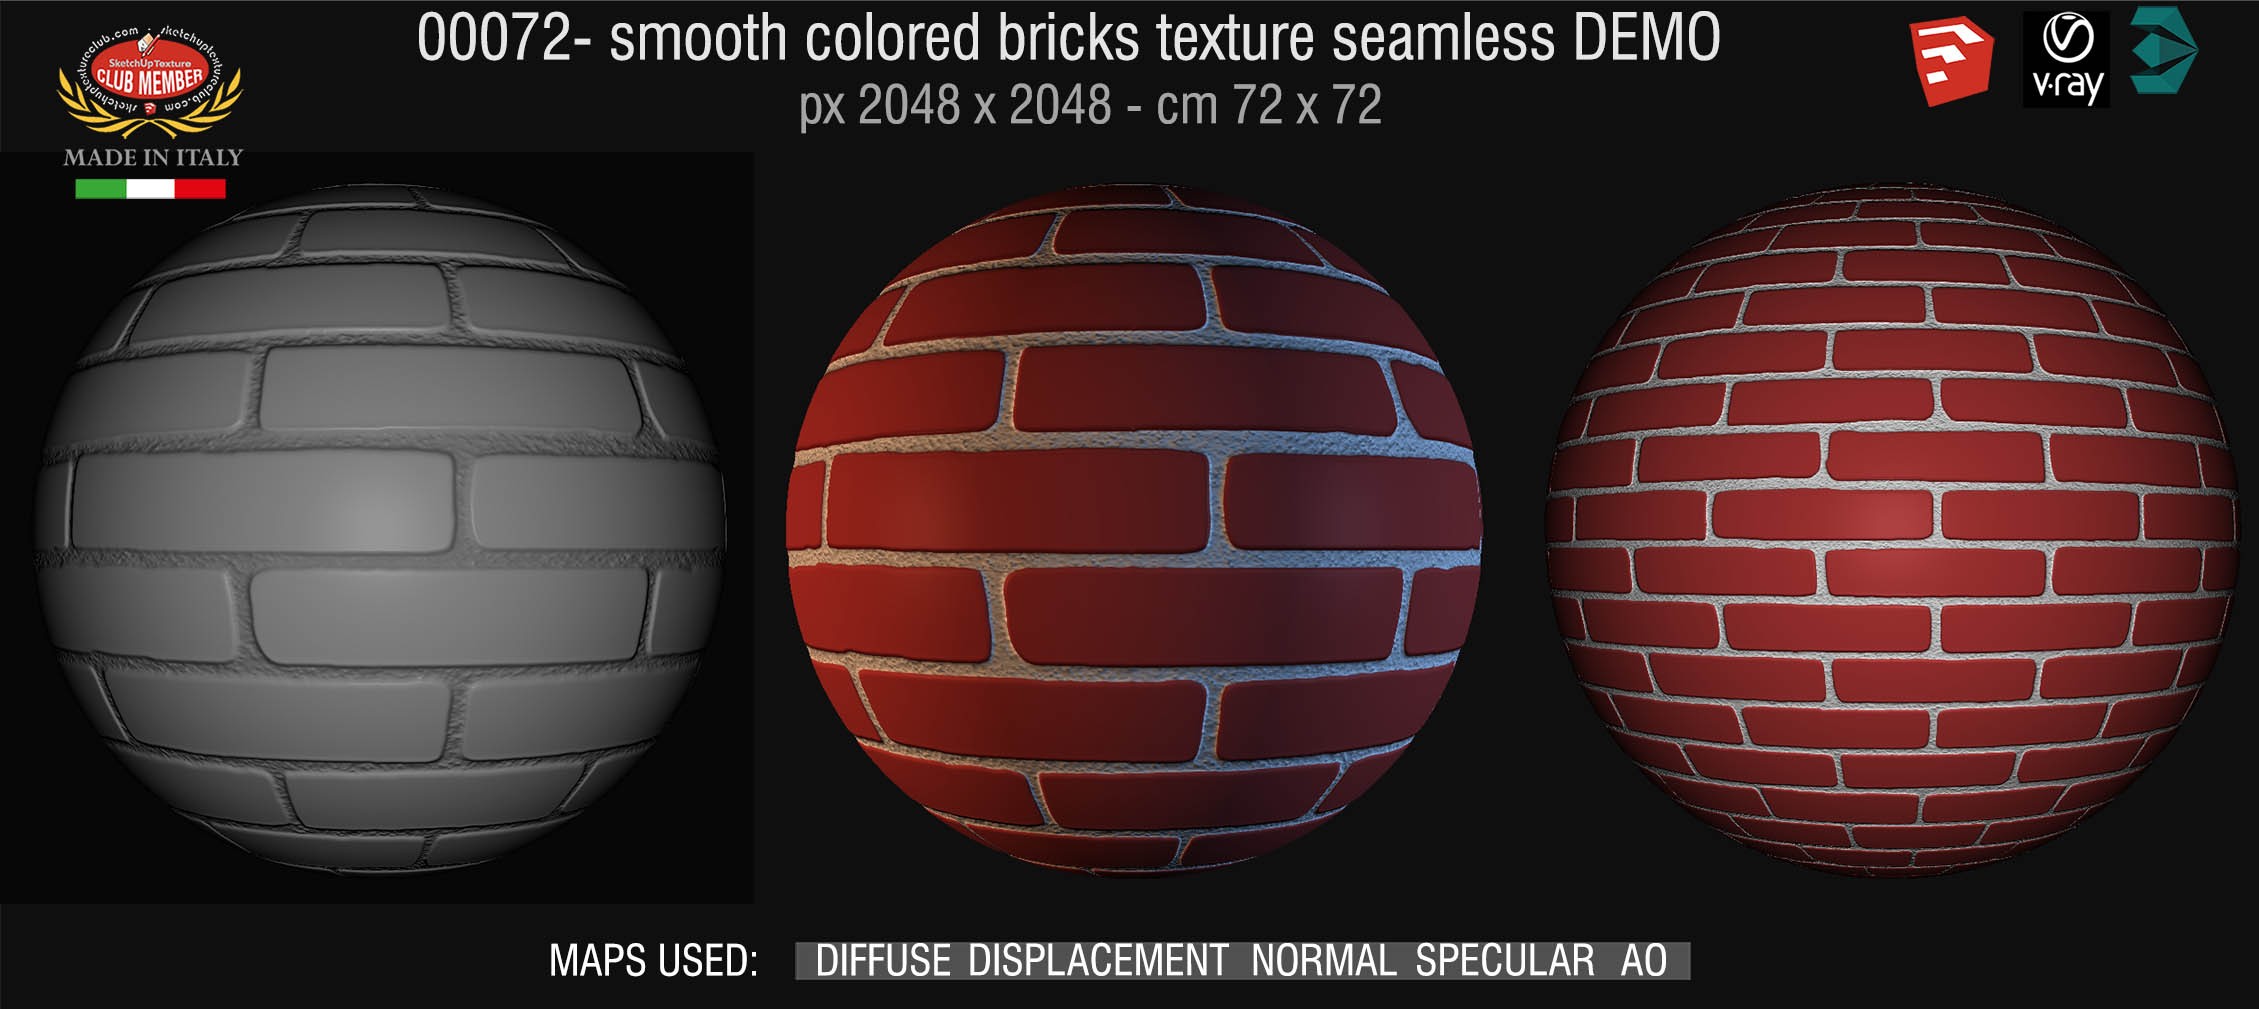 00072 smooth colored bricks texture seamless + maps DEMO